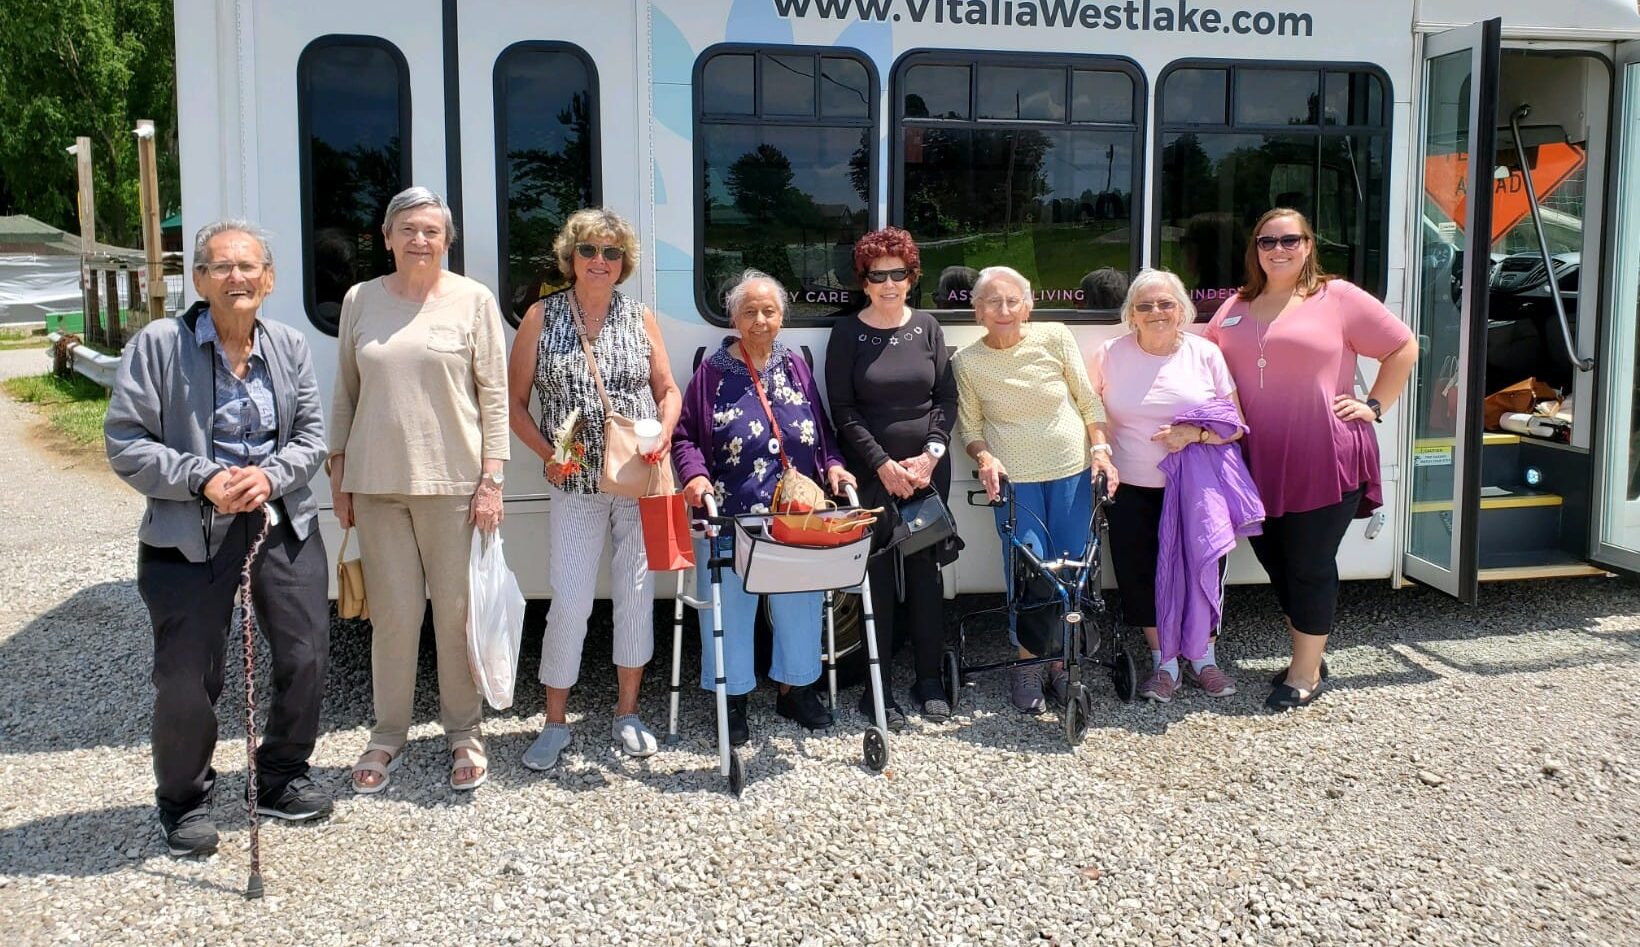 VITALIA® Westlake in Westlake, OH residents